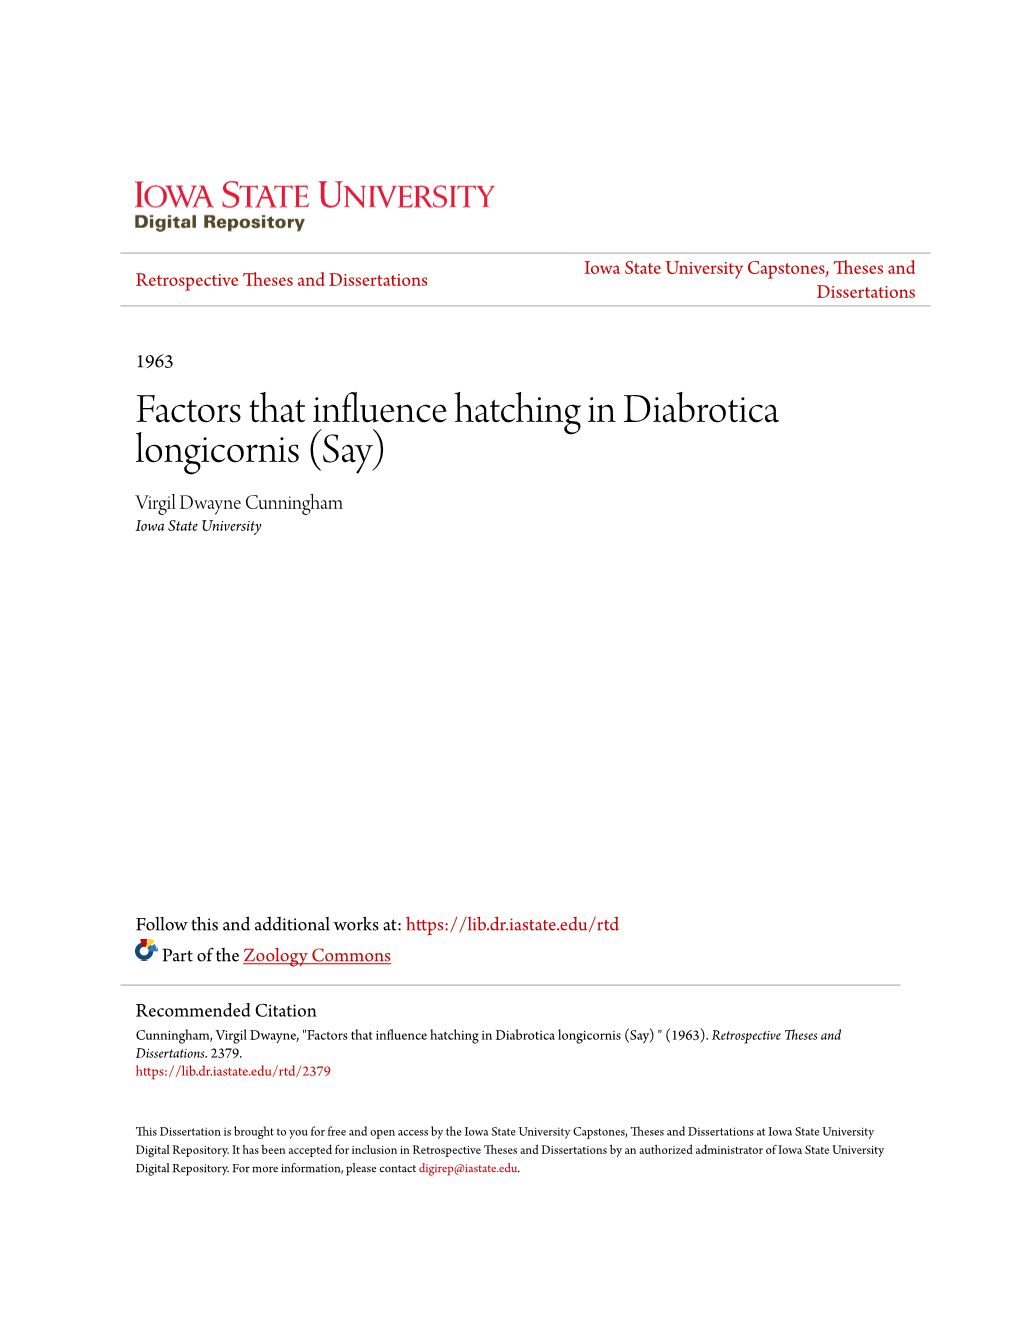 Factors That Influence Hatching in Diabrotica Longicornis (Say) Virgil Dwayne Cunningham Iowa State University